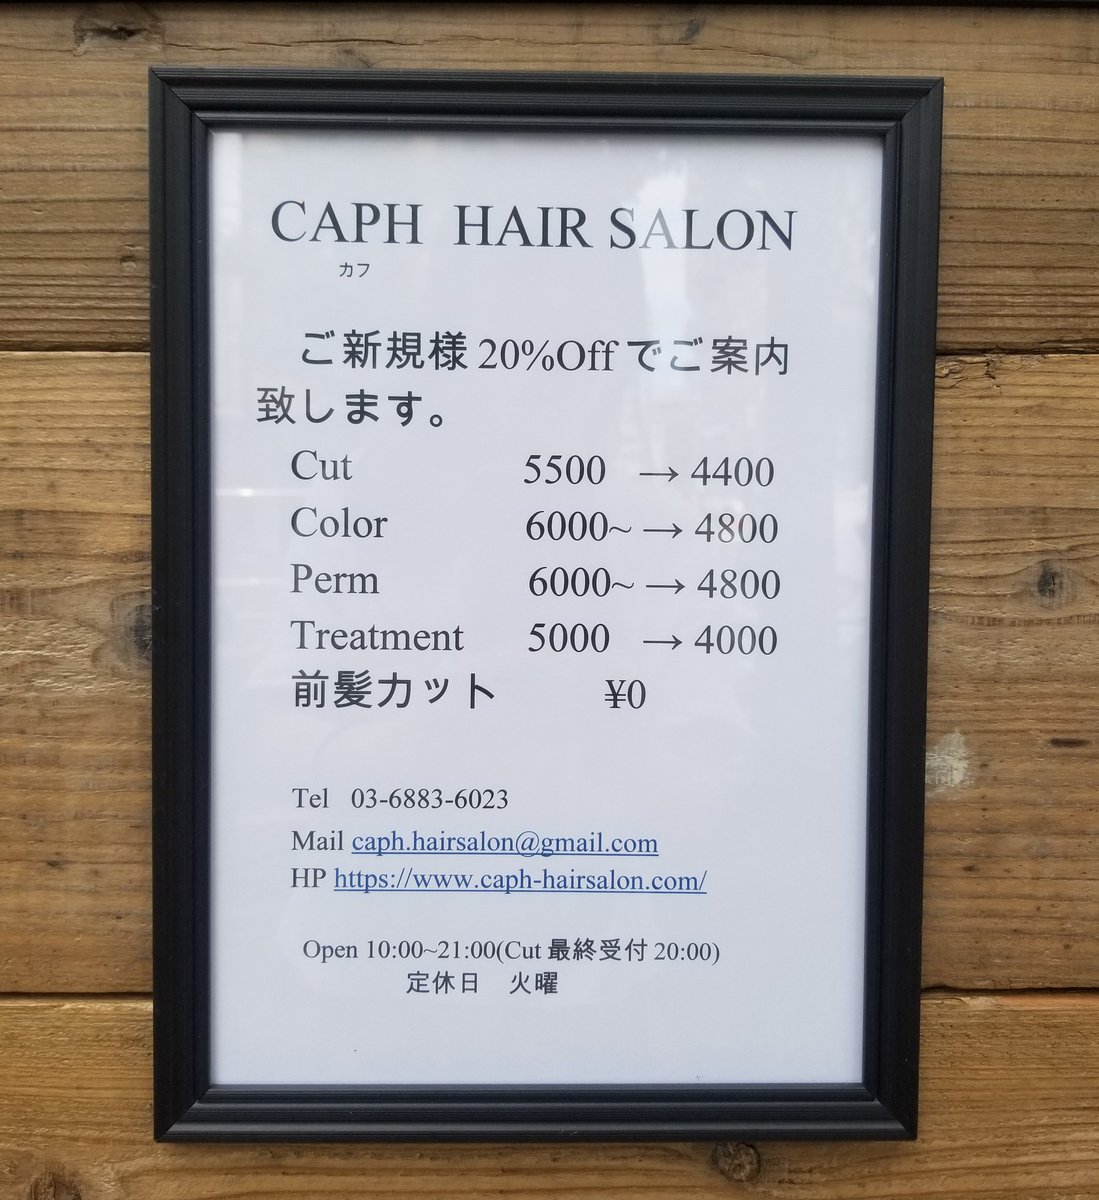 Caph Hair Salon Sur Twitter 新高円寺 美容室 美容院 新規割引 前髪カット無料